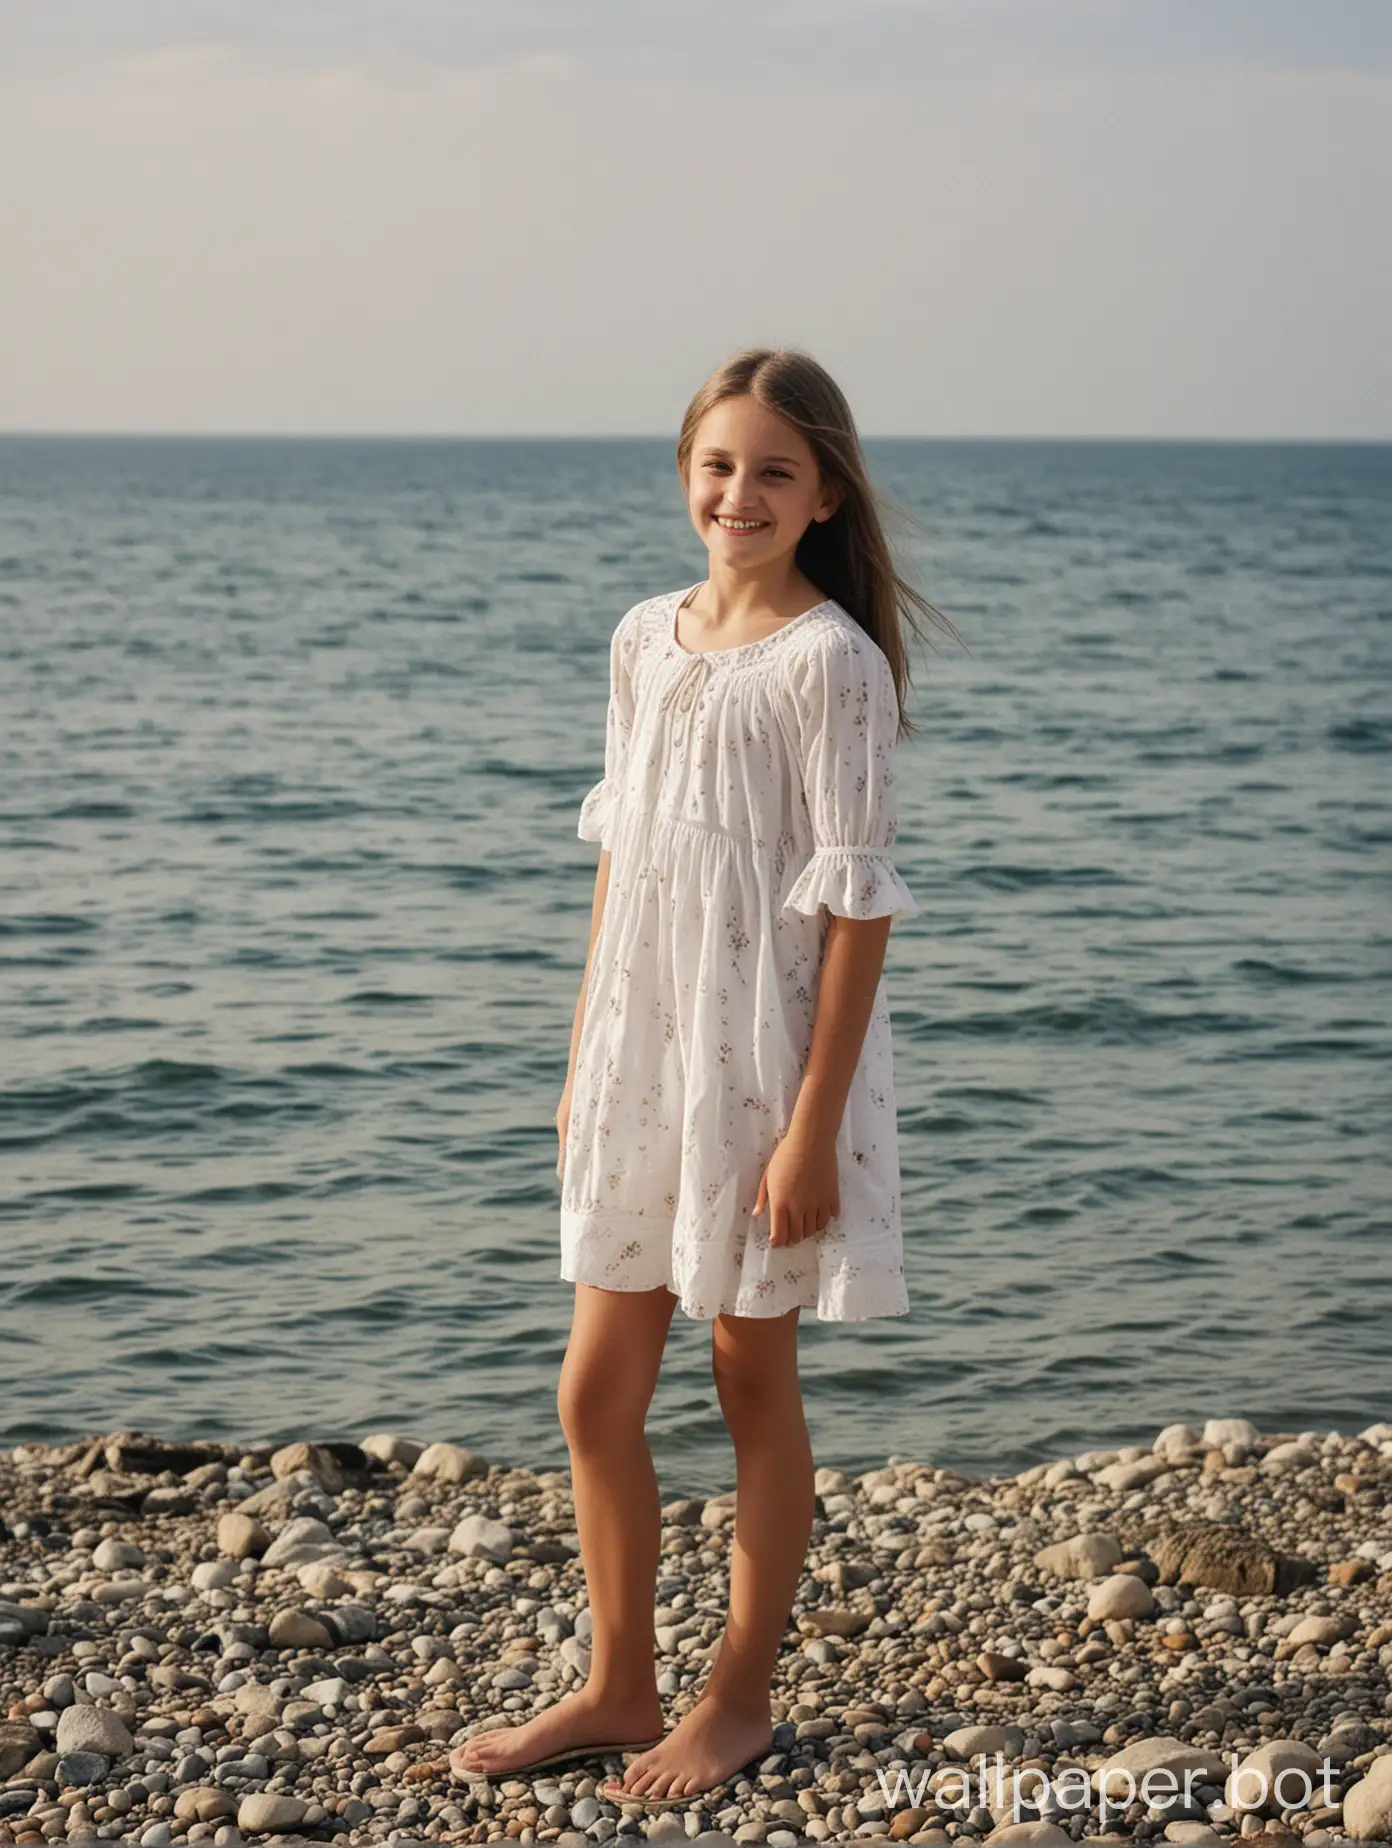 Scenic-View-of-Crimea-Sea-with-Joyful-11YearOld-Girl-in-Light-Dress